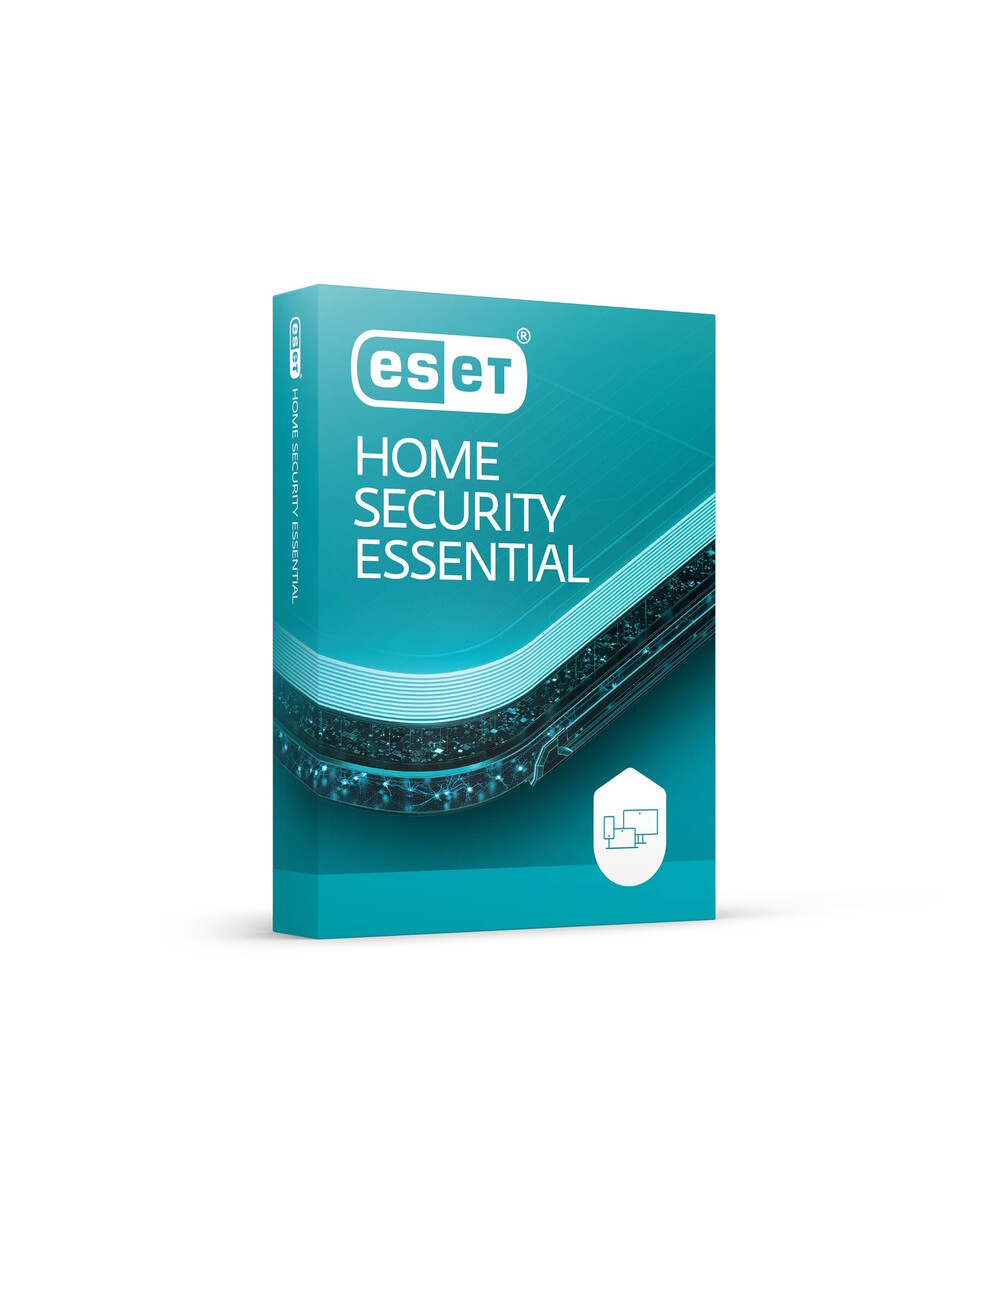 ESET HOME SECURITY ESSENTIAL RINNOVO EX INTERNET SECURITY